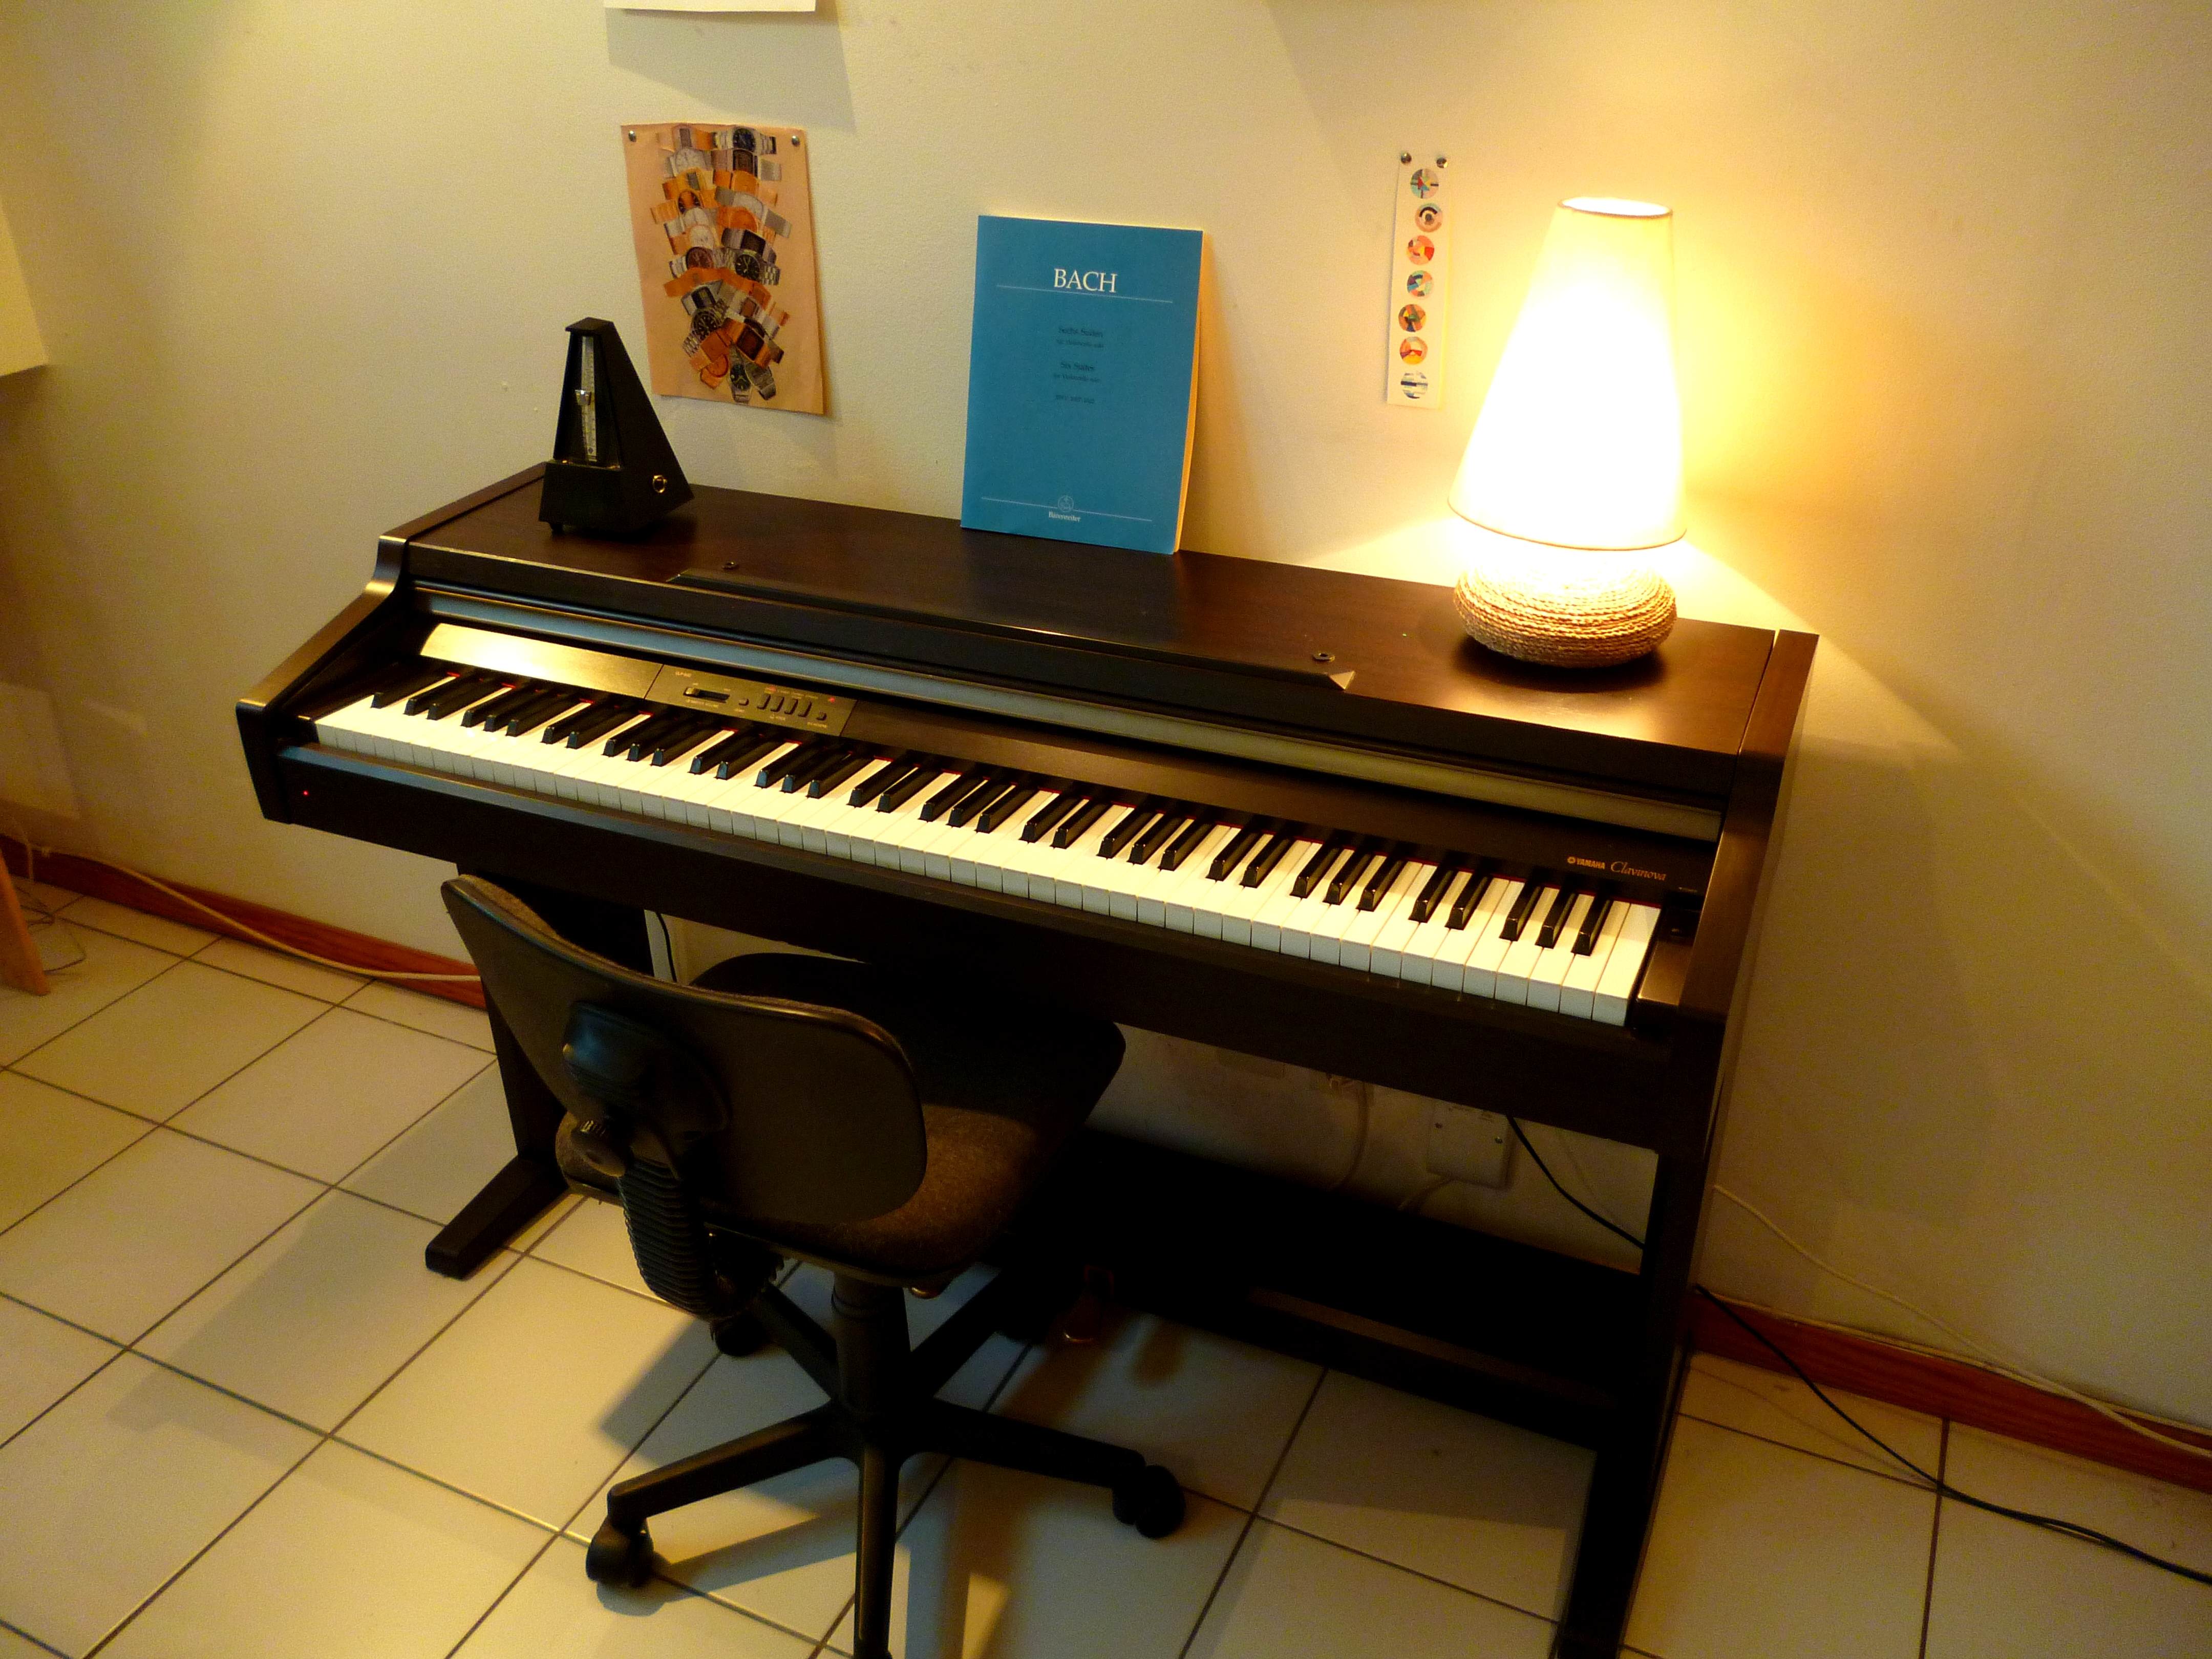 YAMAHA クラビノーバ CLP-920 [2万円] - 鍵盤楽器、ピアノ